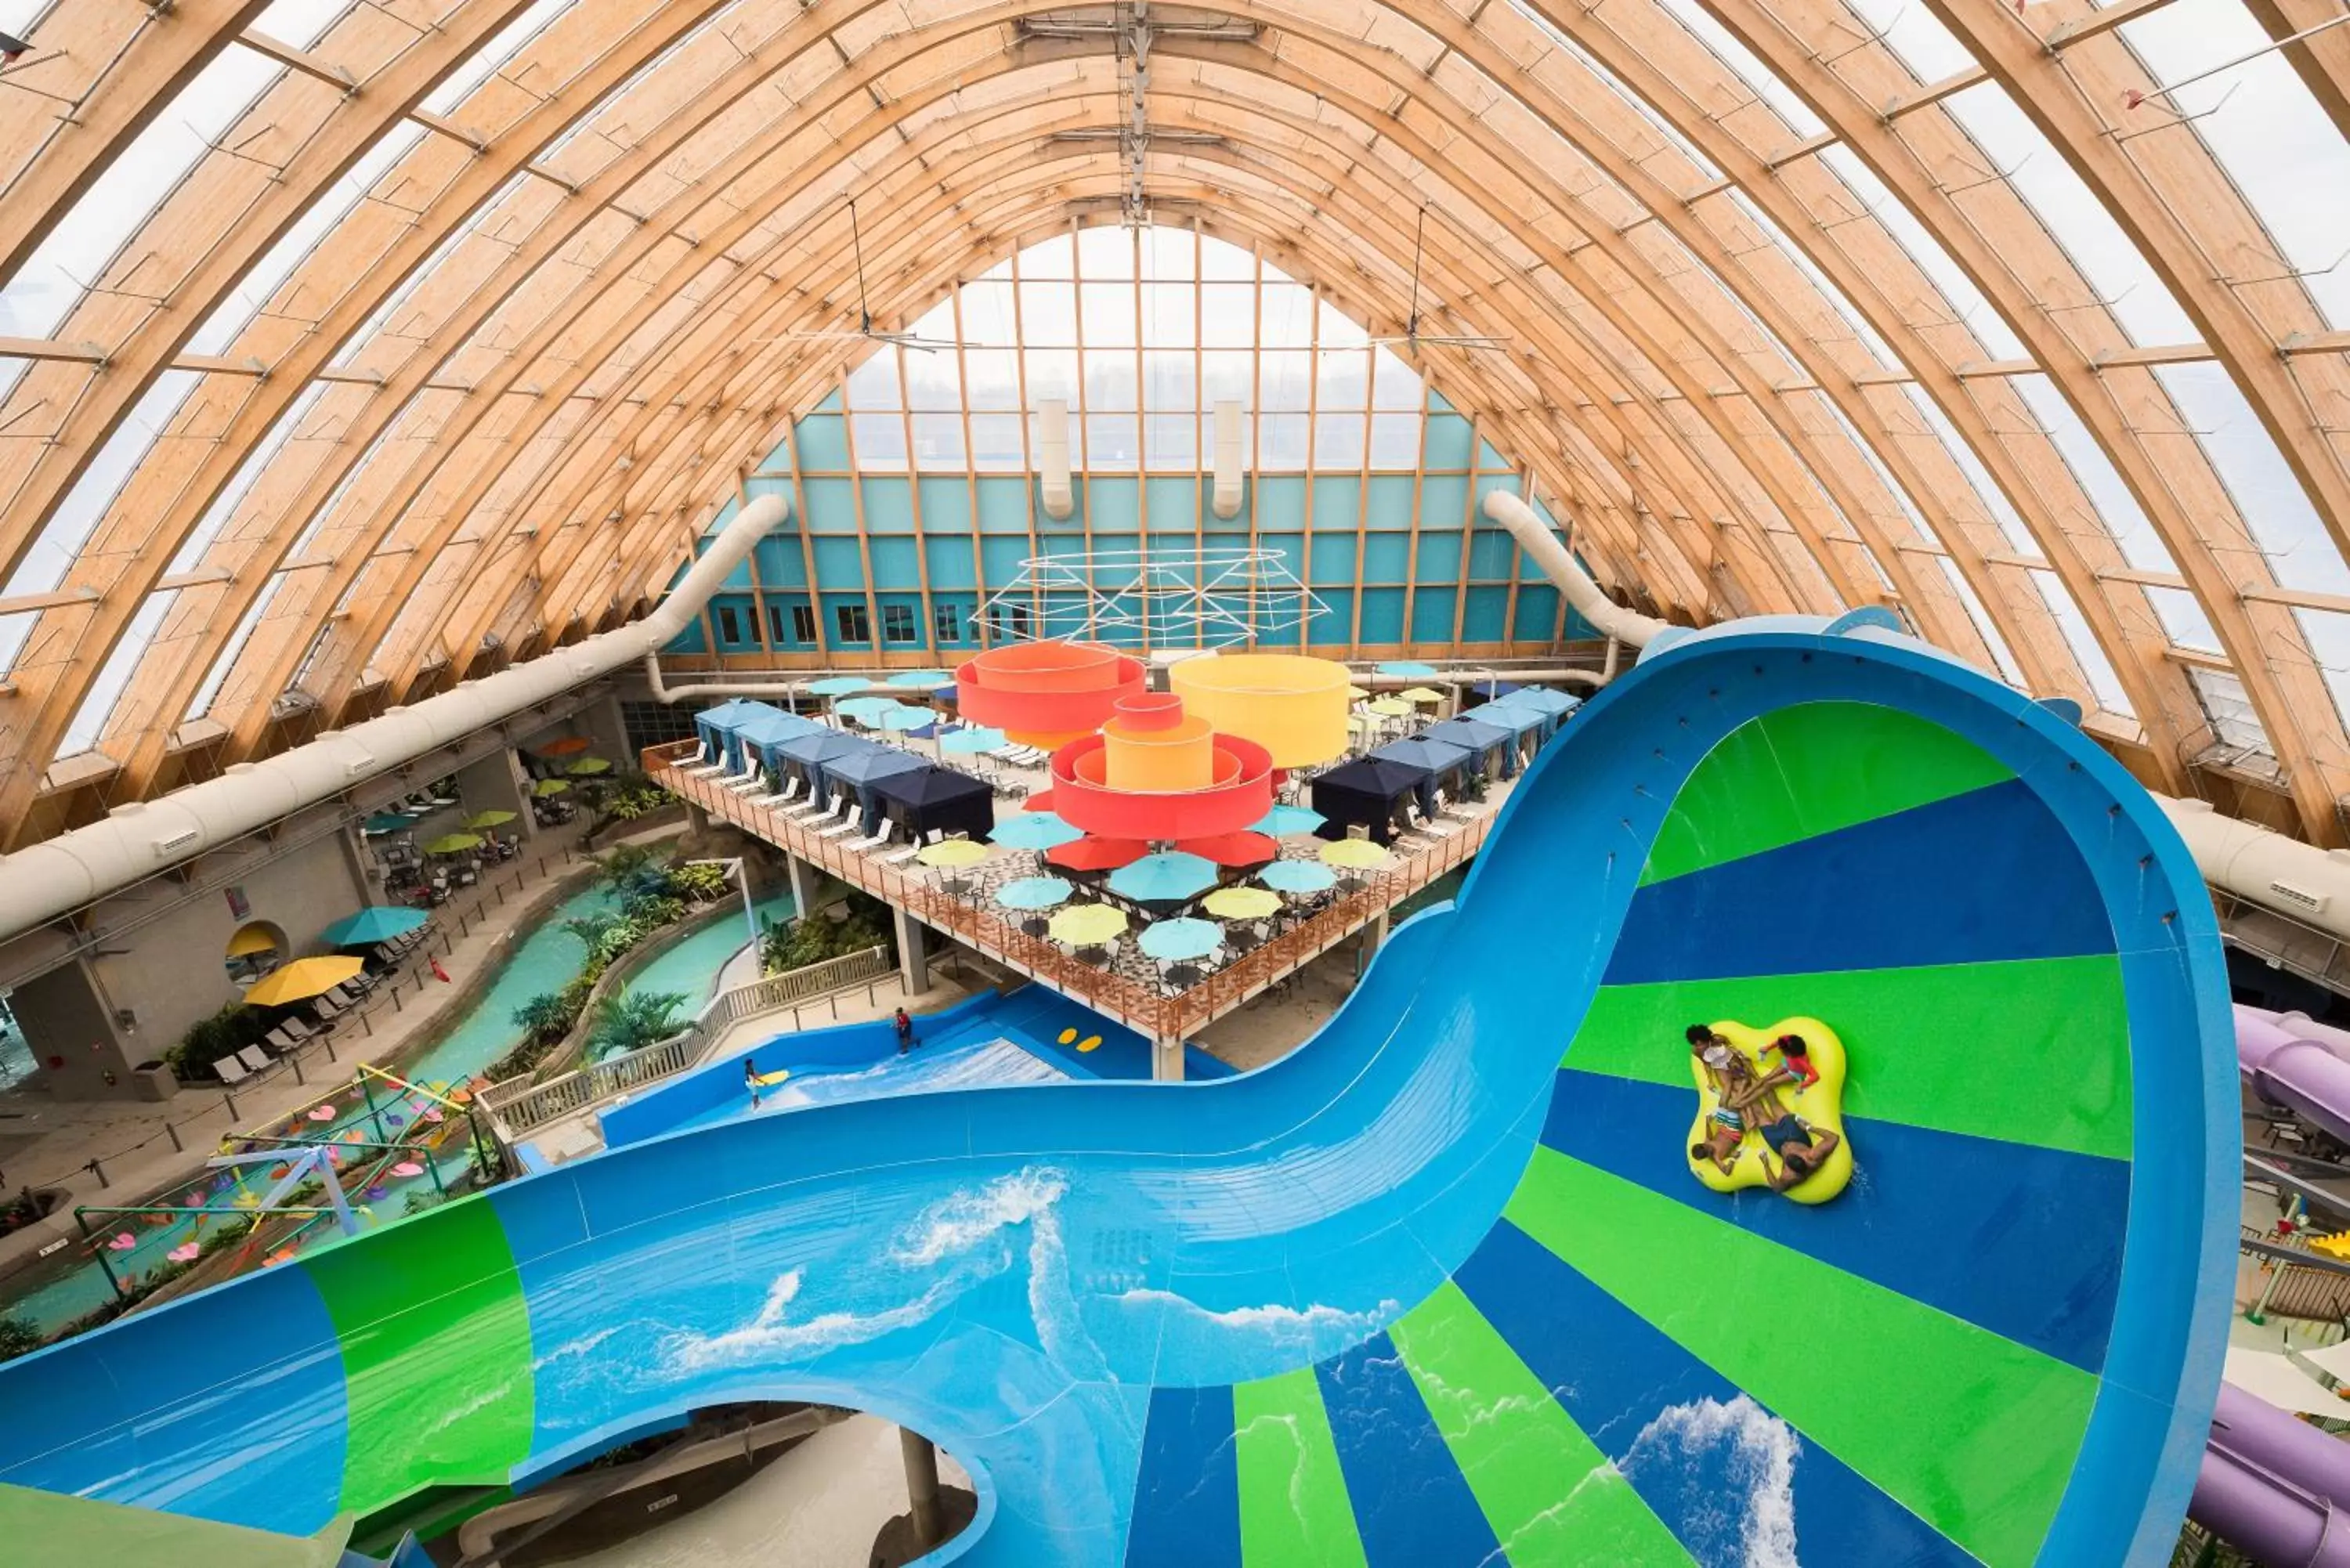 Aqua park, Water Park in The Kartrite Resort and Indoor Waterpark